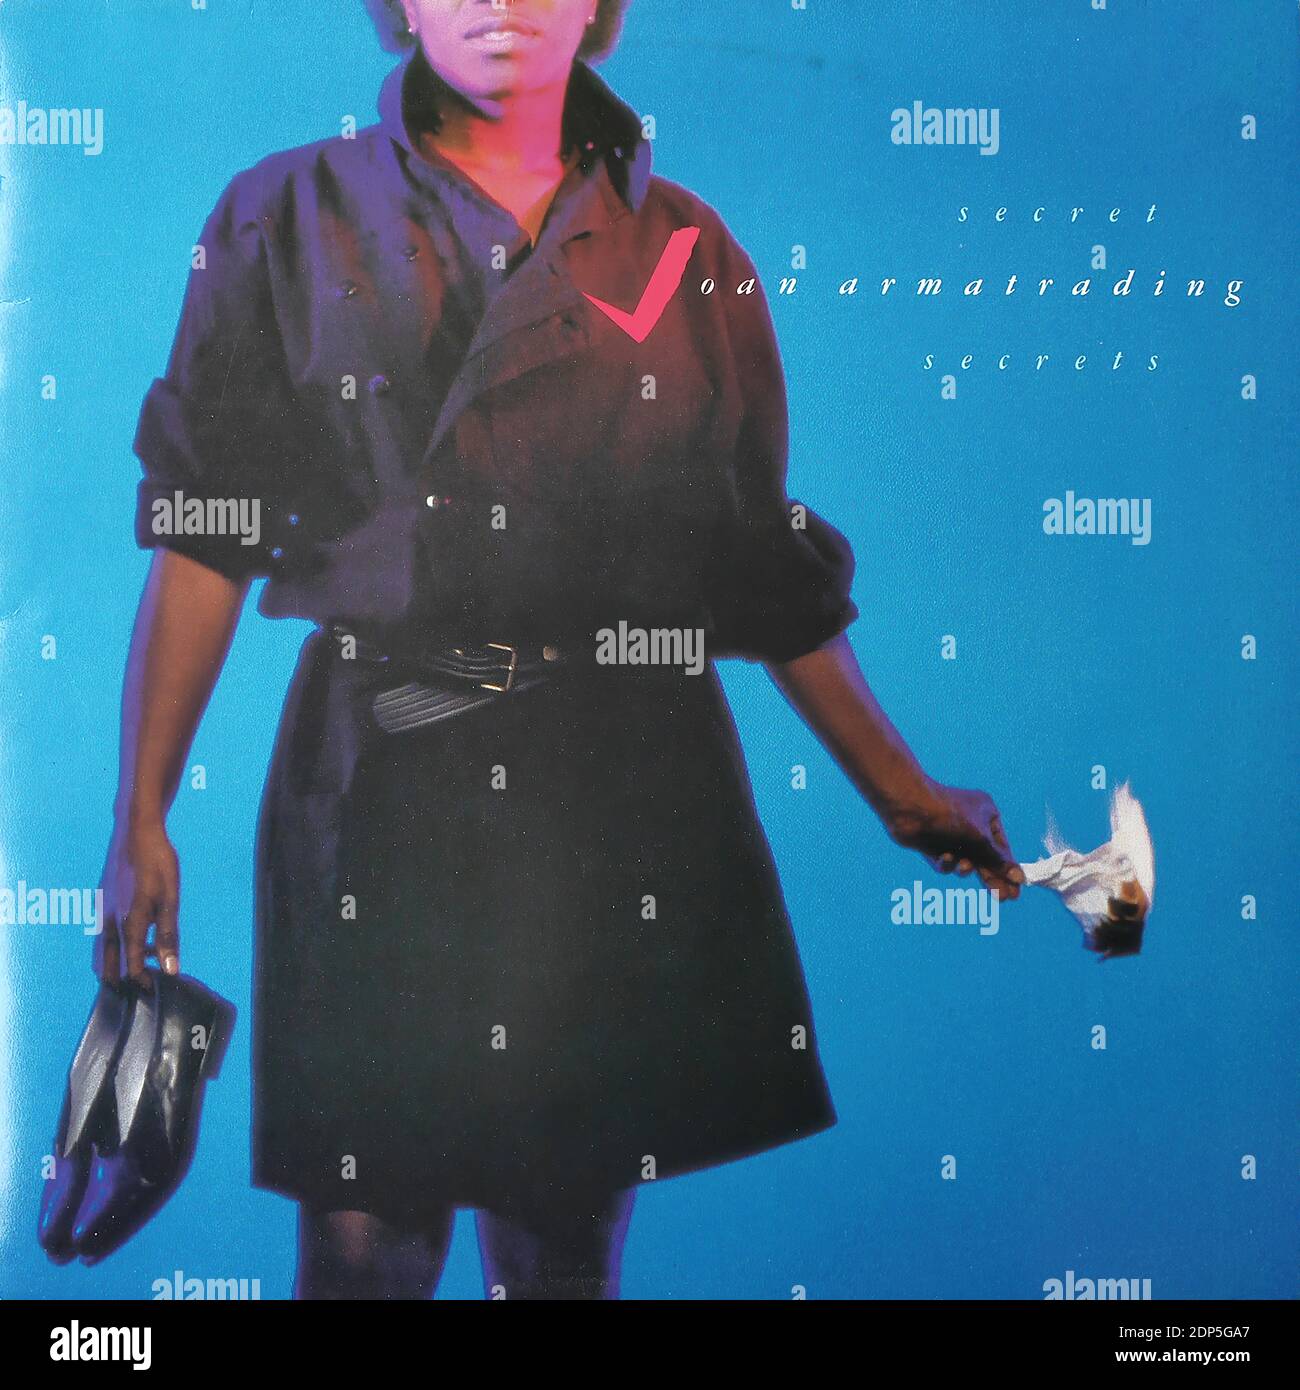 Joan Armatrading - Secret Secrets, A&M Records AMA 5040, 1985 - Vintage  vinyl album cover Stock Photo - Alamy